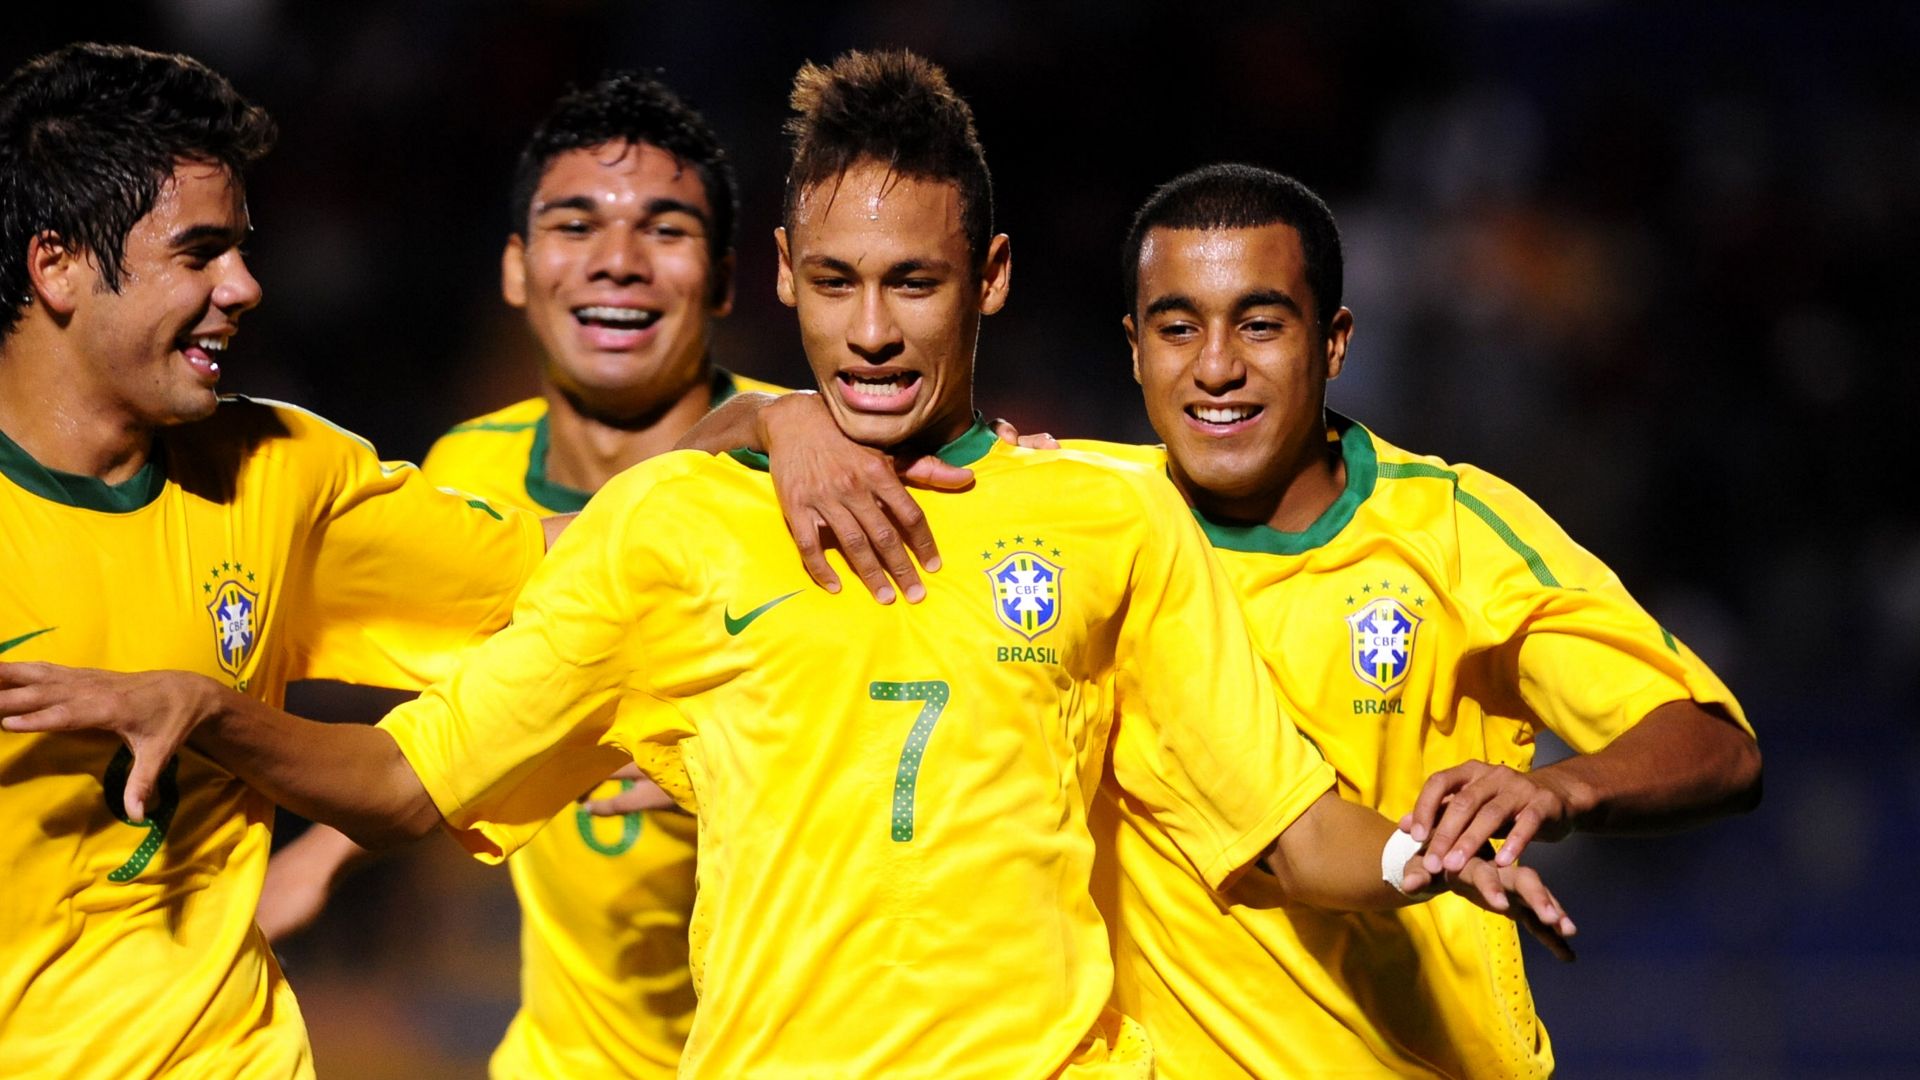 2011-neymar-lucas-moura-casemiro-henrique-almeida-brazil-u20-championship_1444nlueaaaaazgsud1sv8gji.jpg